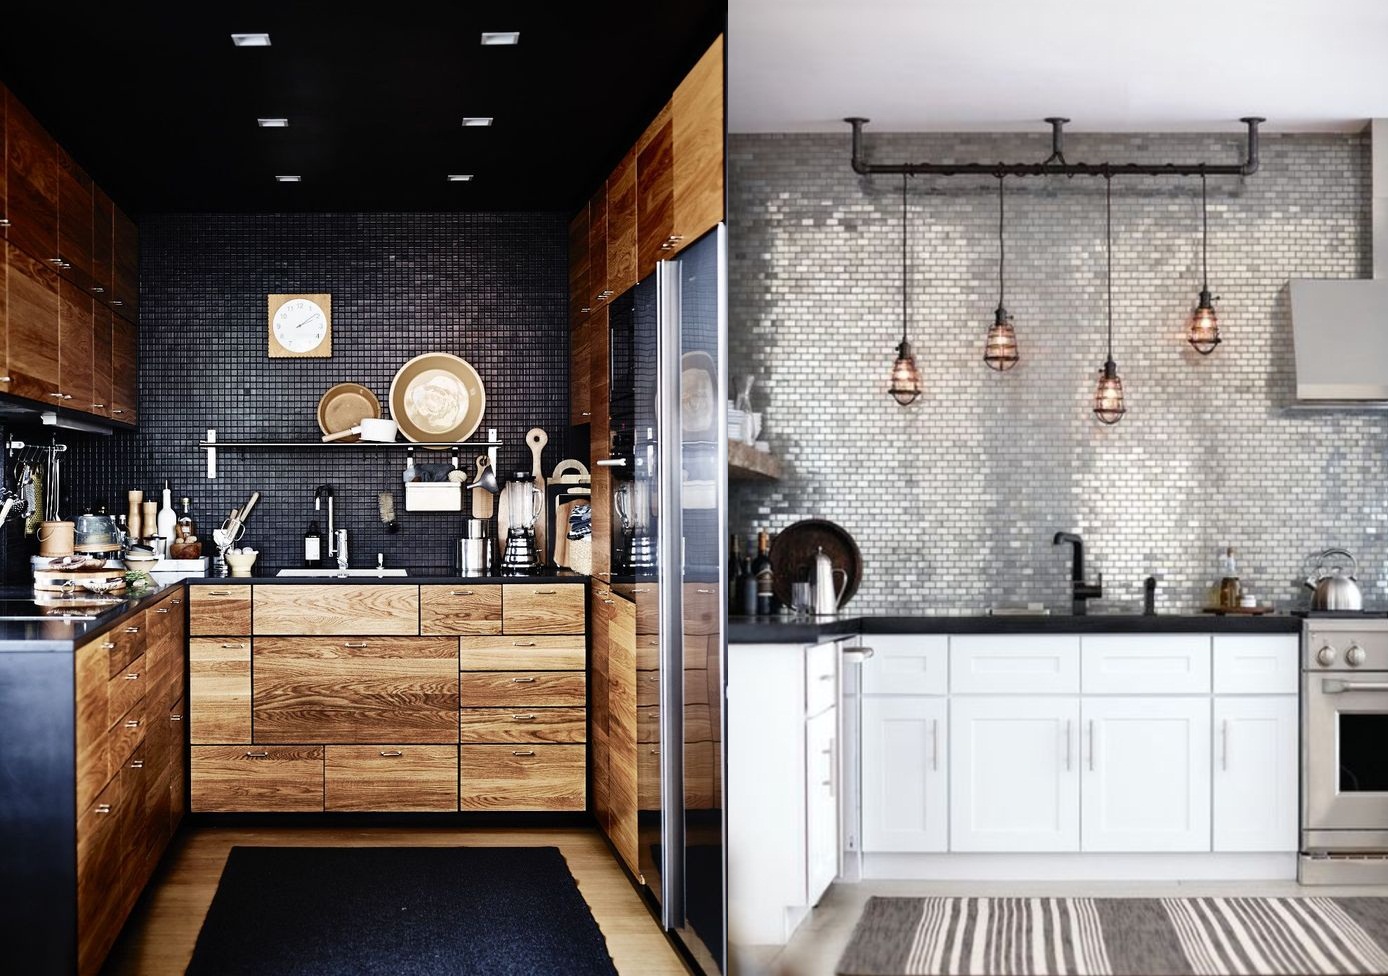 21 Small Kitchen Design Ideas Photo Gallery